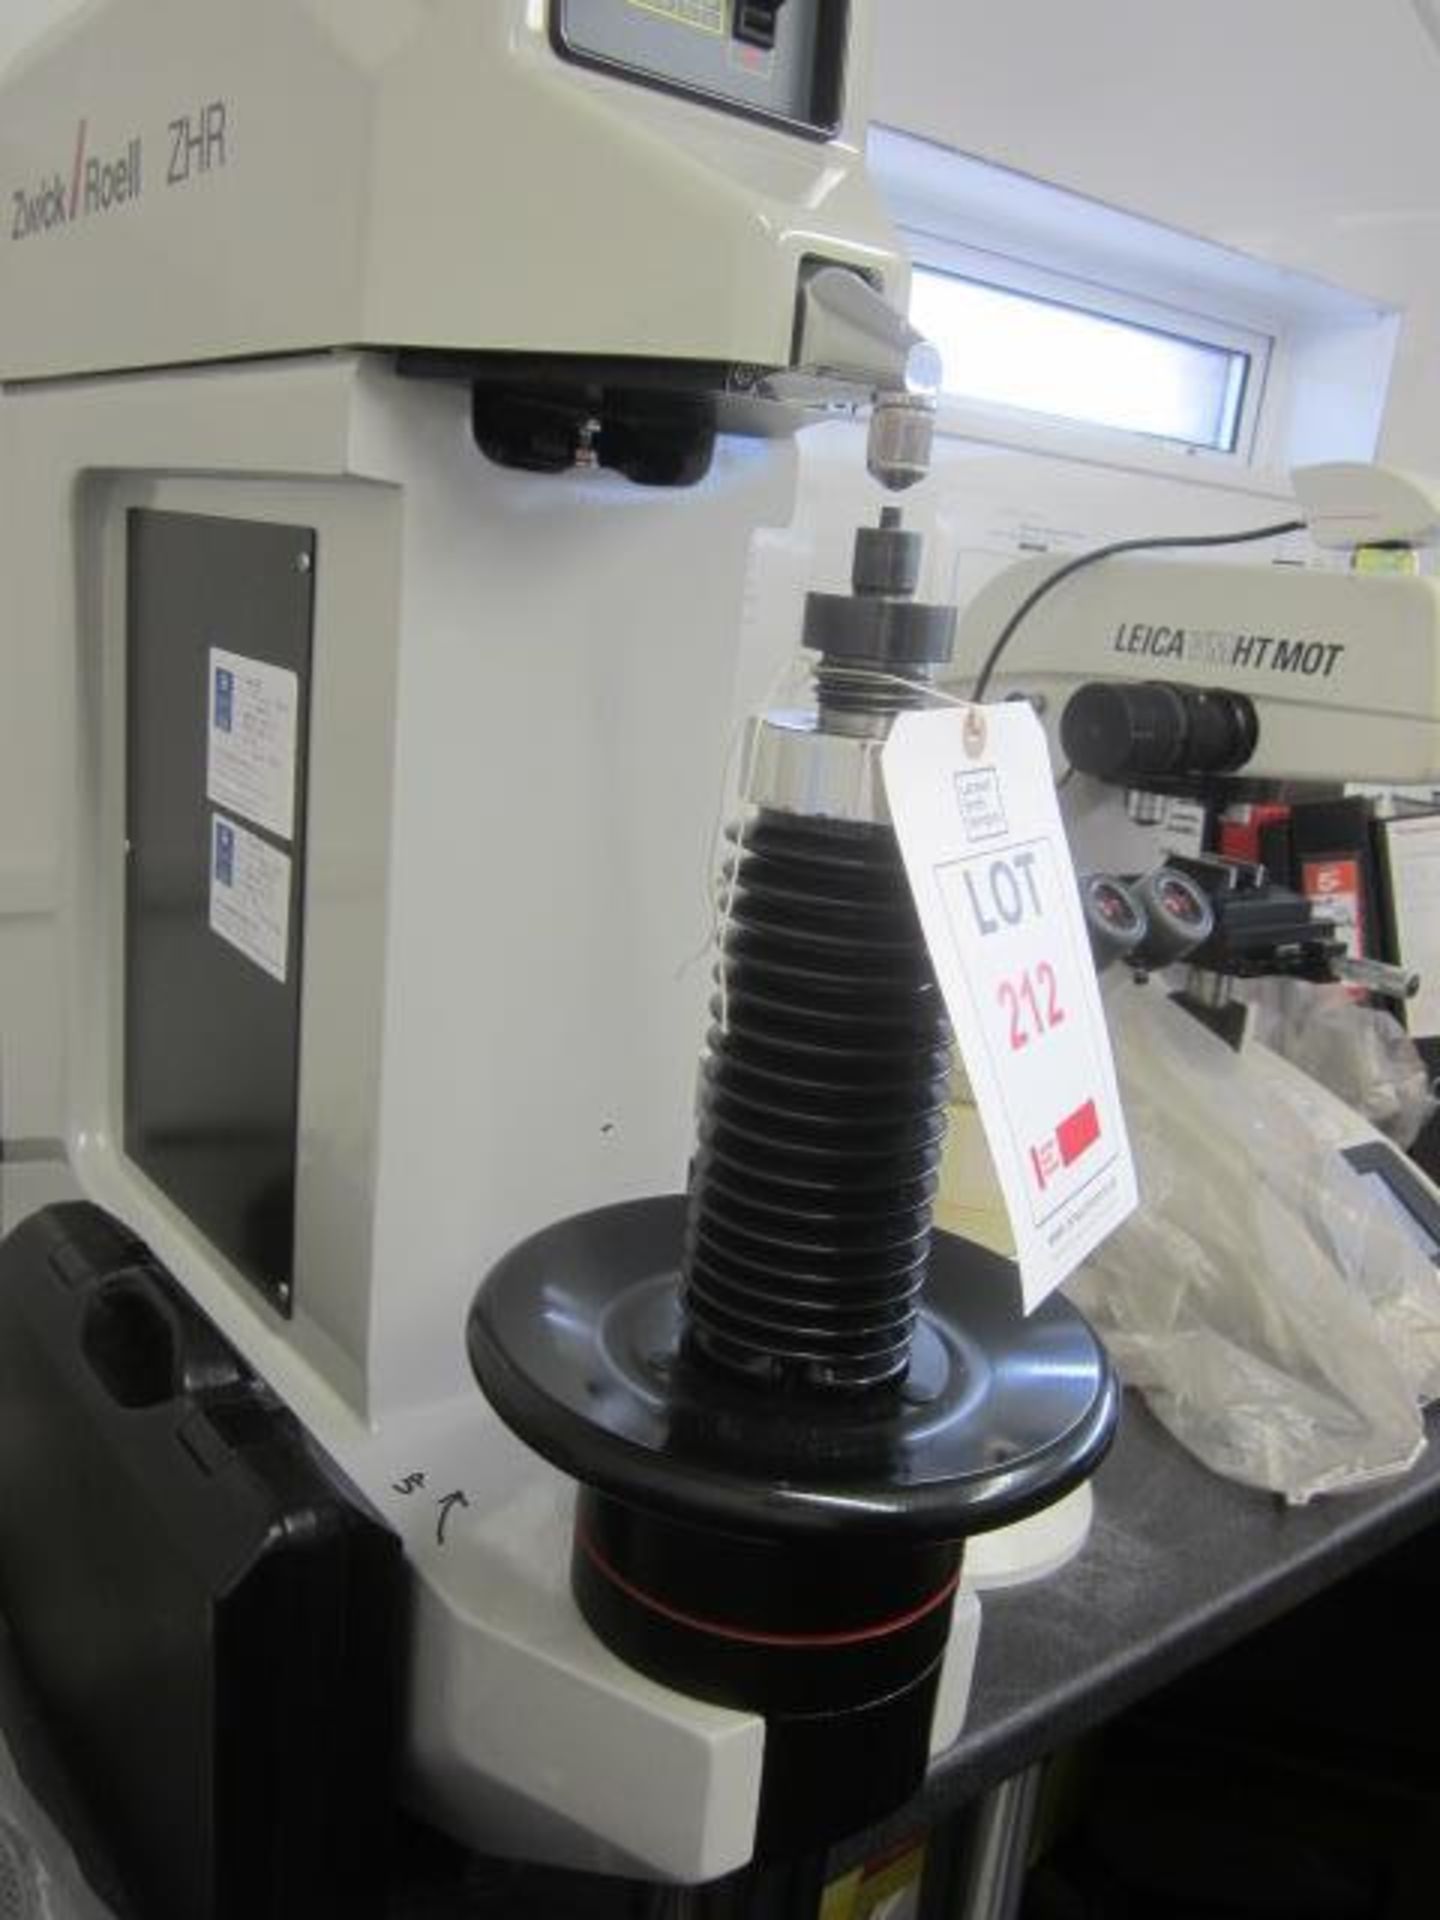 Zwick Roell ZHR hardness testing machine, machine type 4045AK, serial no. 124480 (2012) - Image 5 of 6